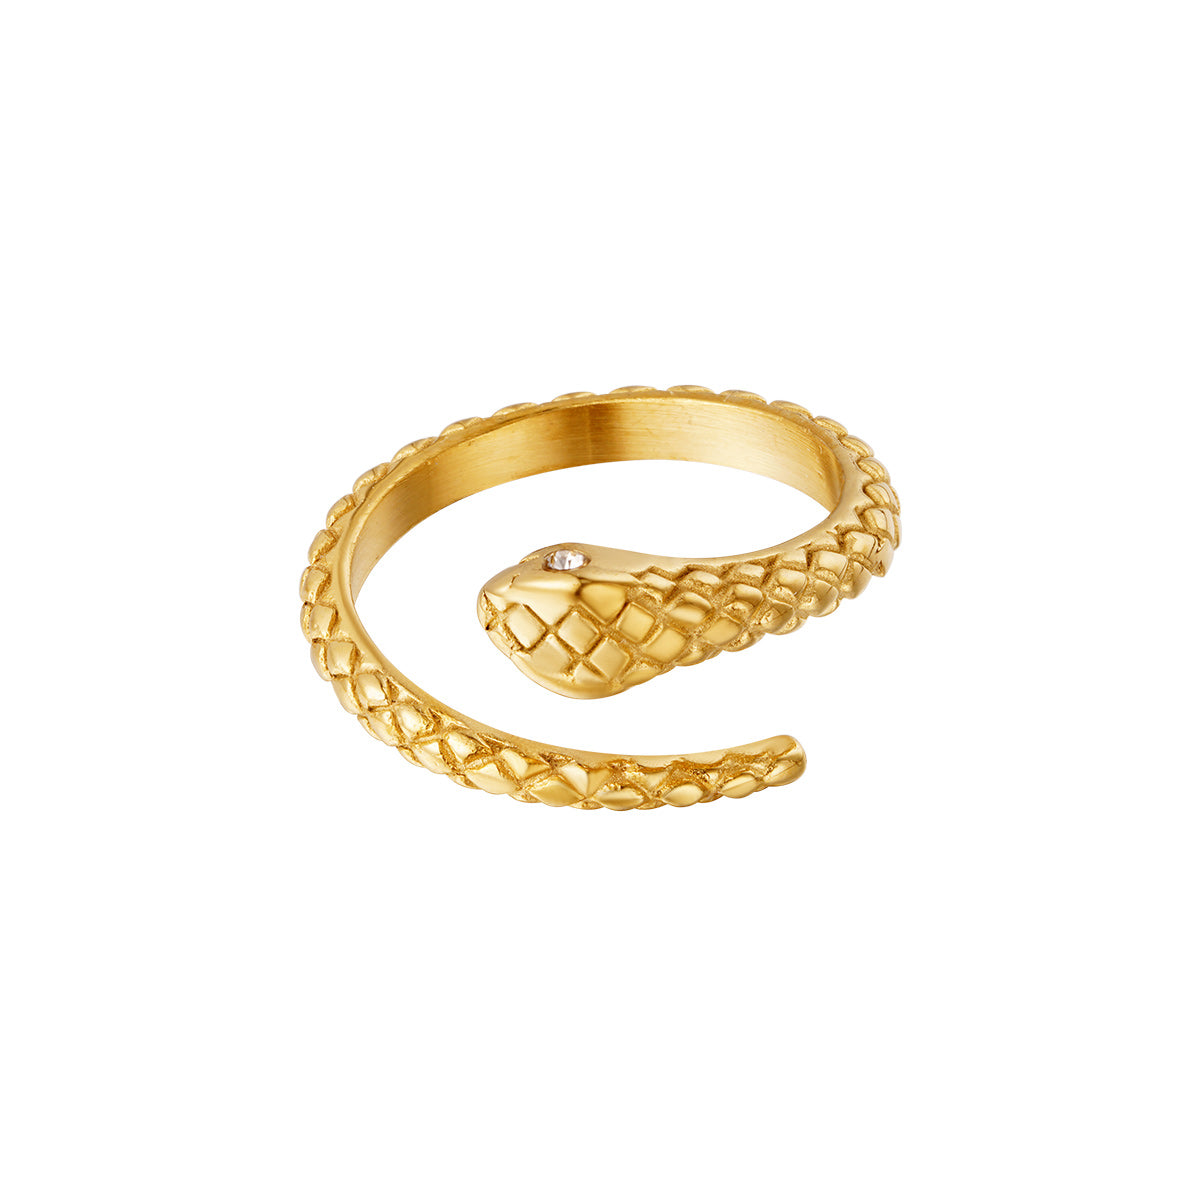 Altın kobra yüzüğü